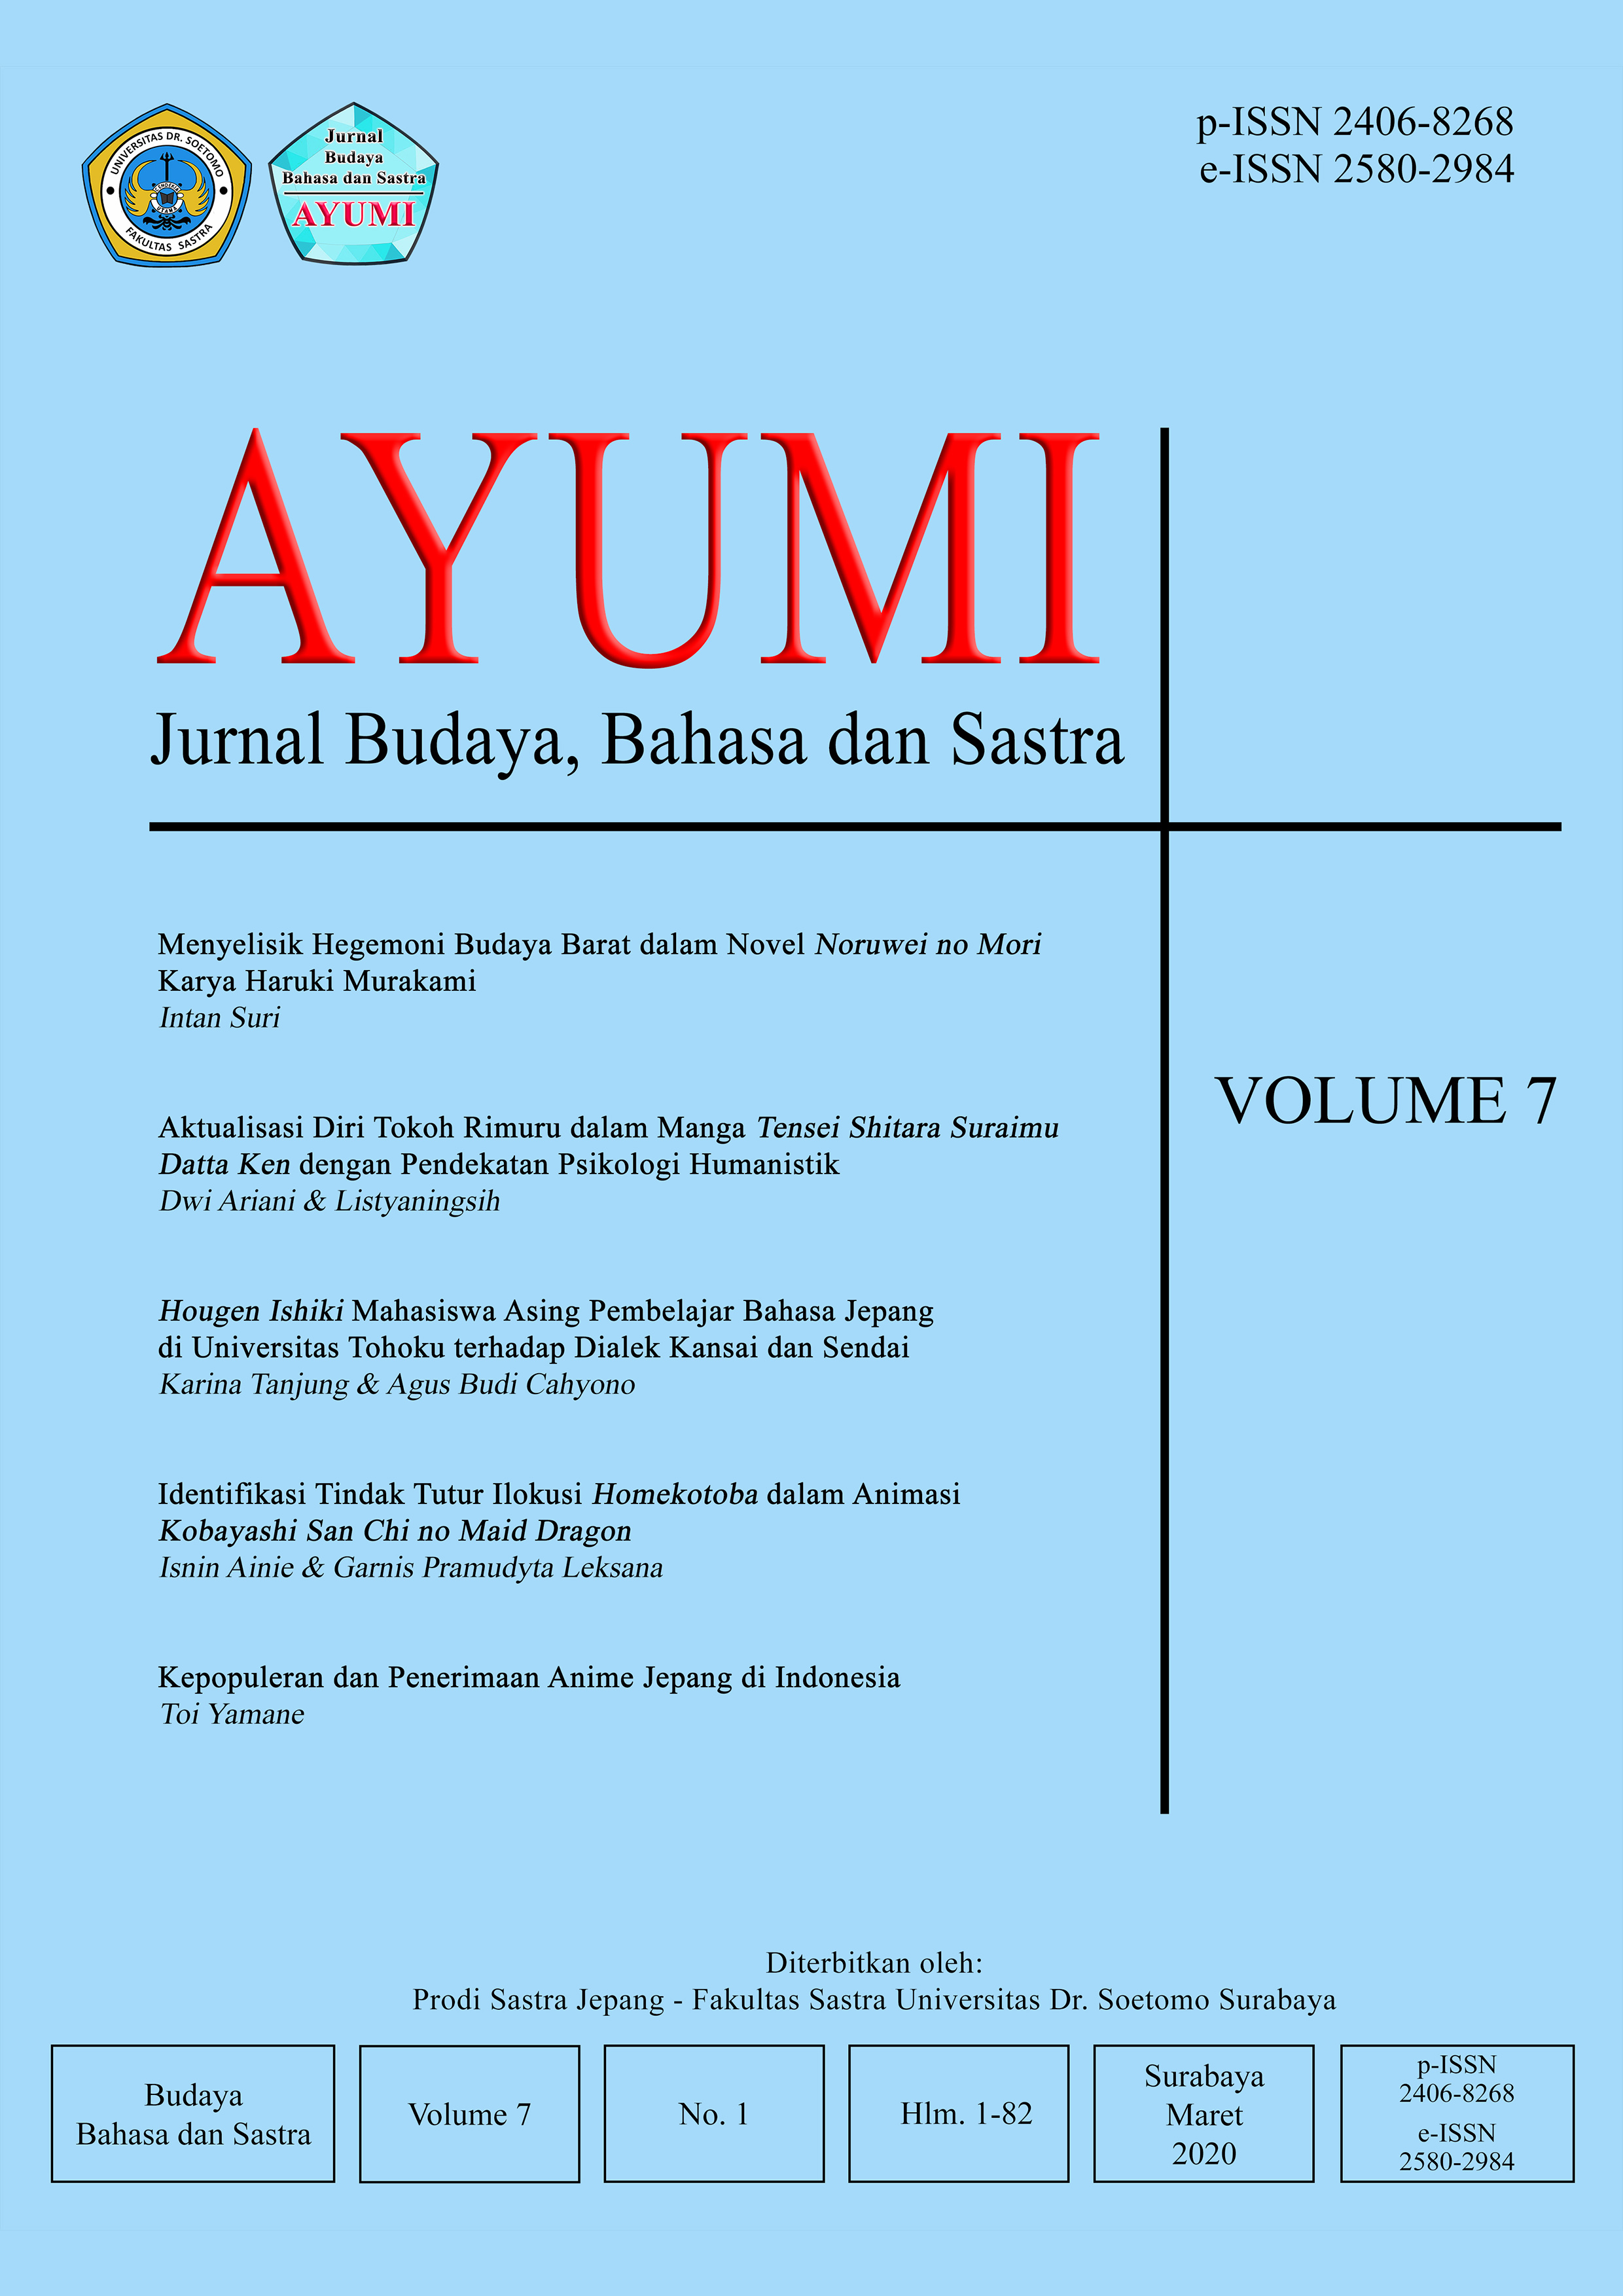 Archives Ayumi Jurnal Budaya, Bahasa dan Sastra